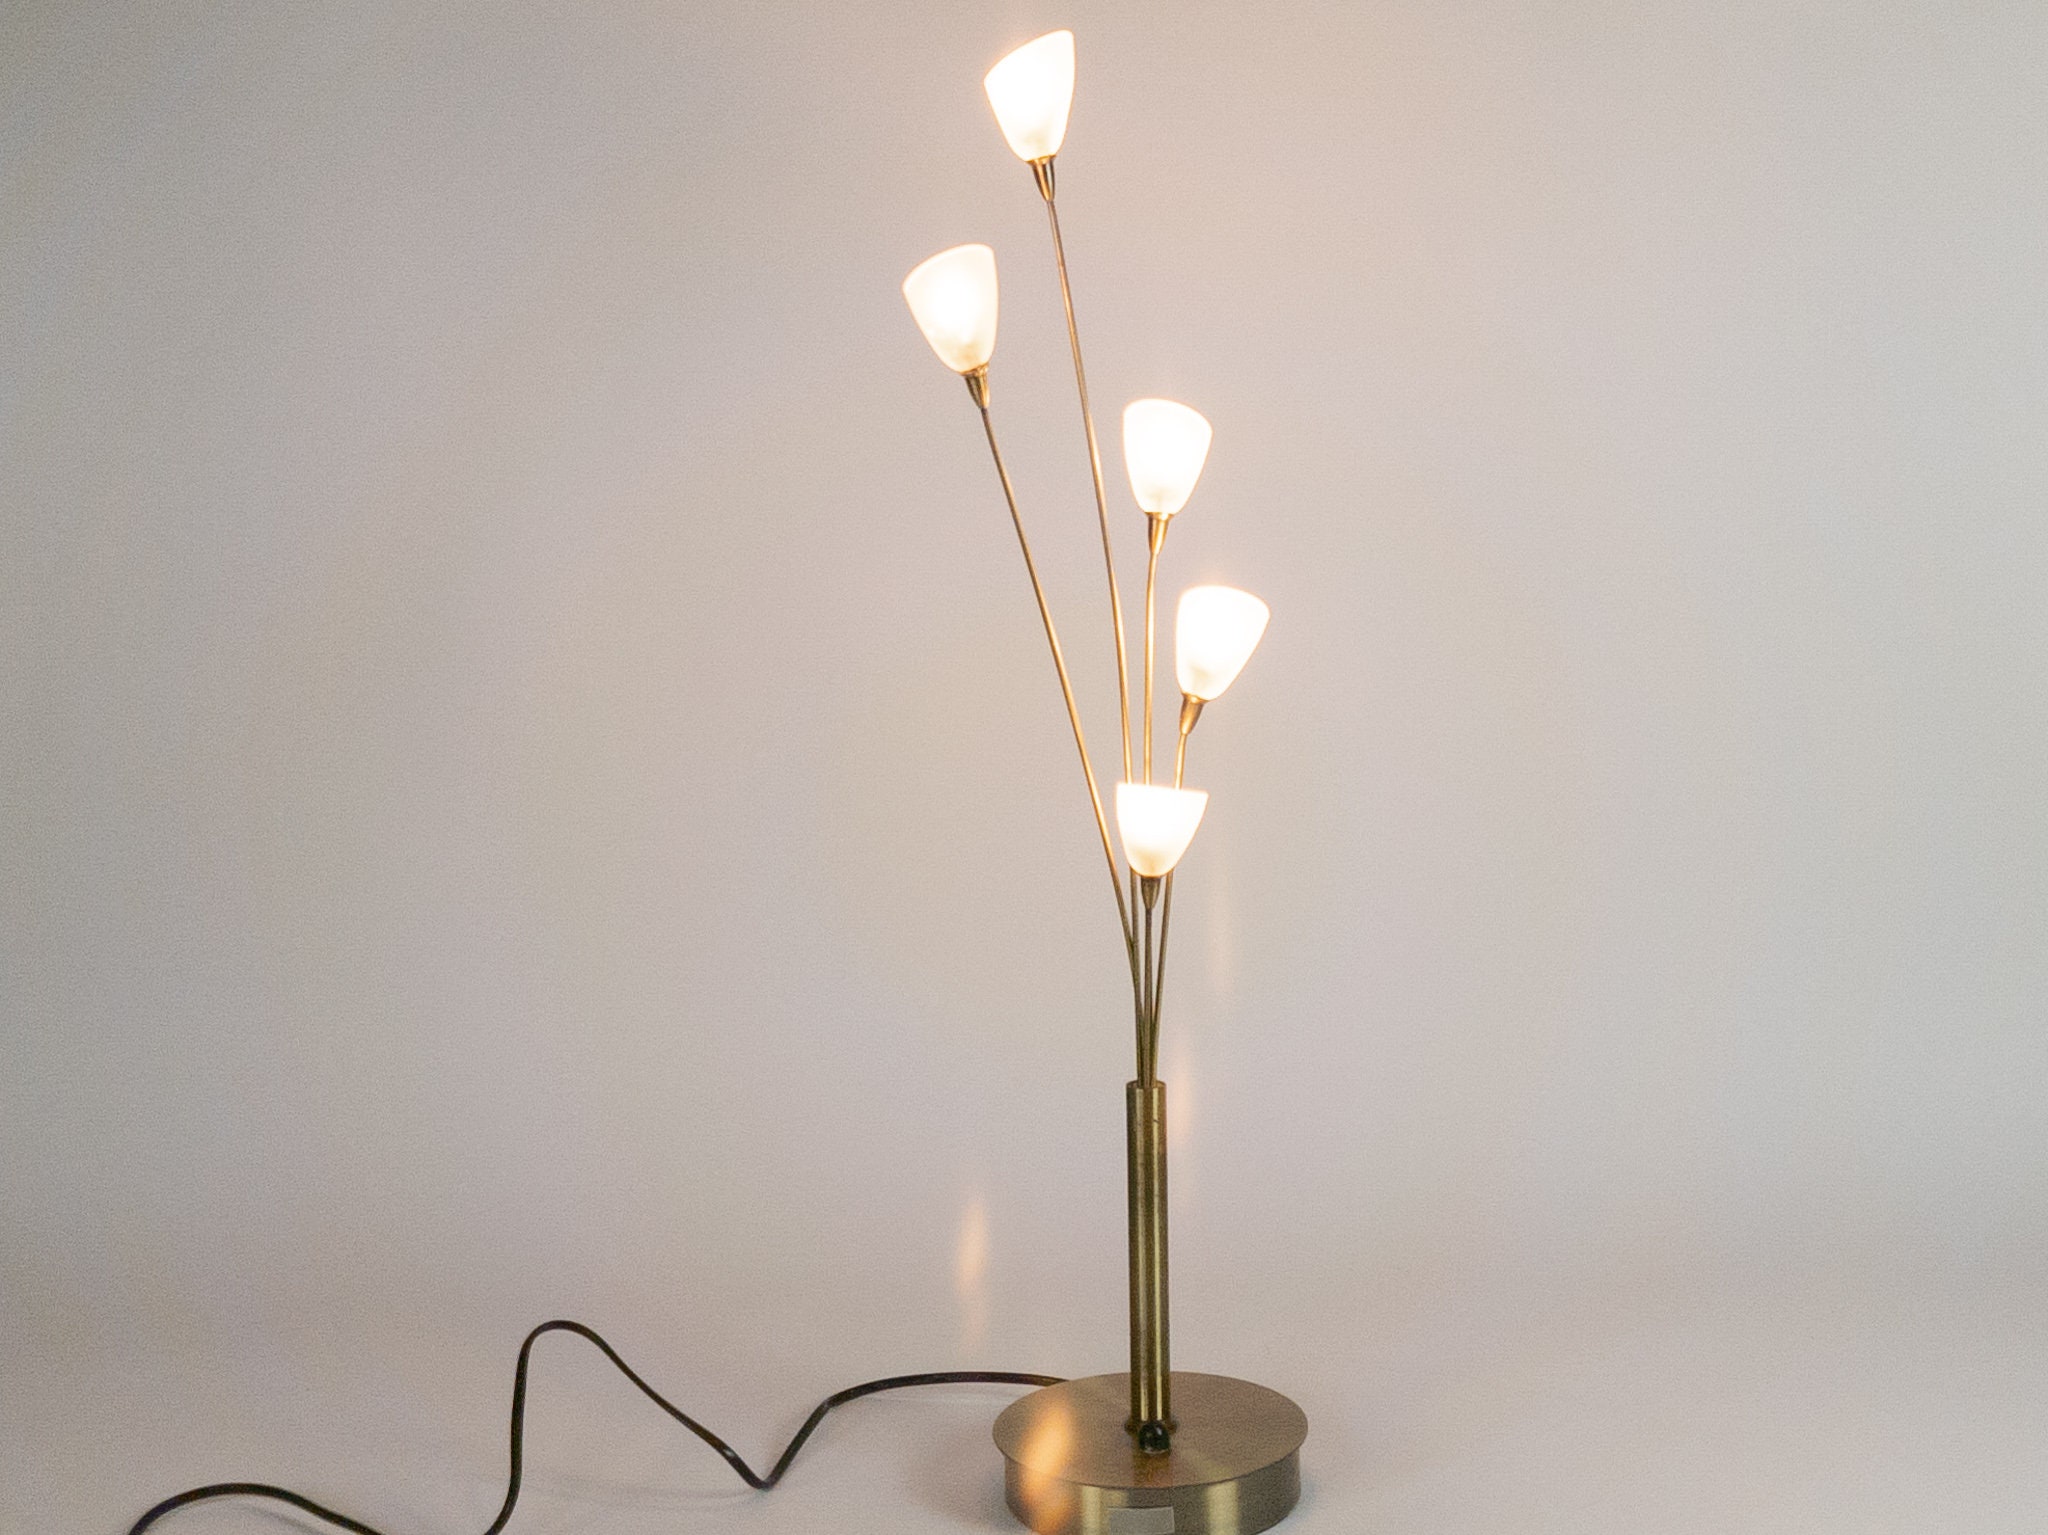 Verbinding Onzorgvuldigheid de elite Dutch Design Boxford Lamp Holland Designer Jan Des - Etsy